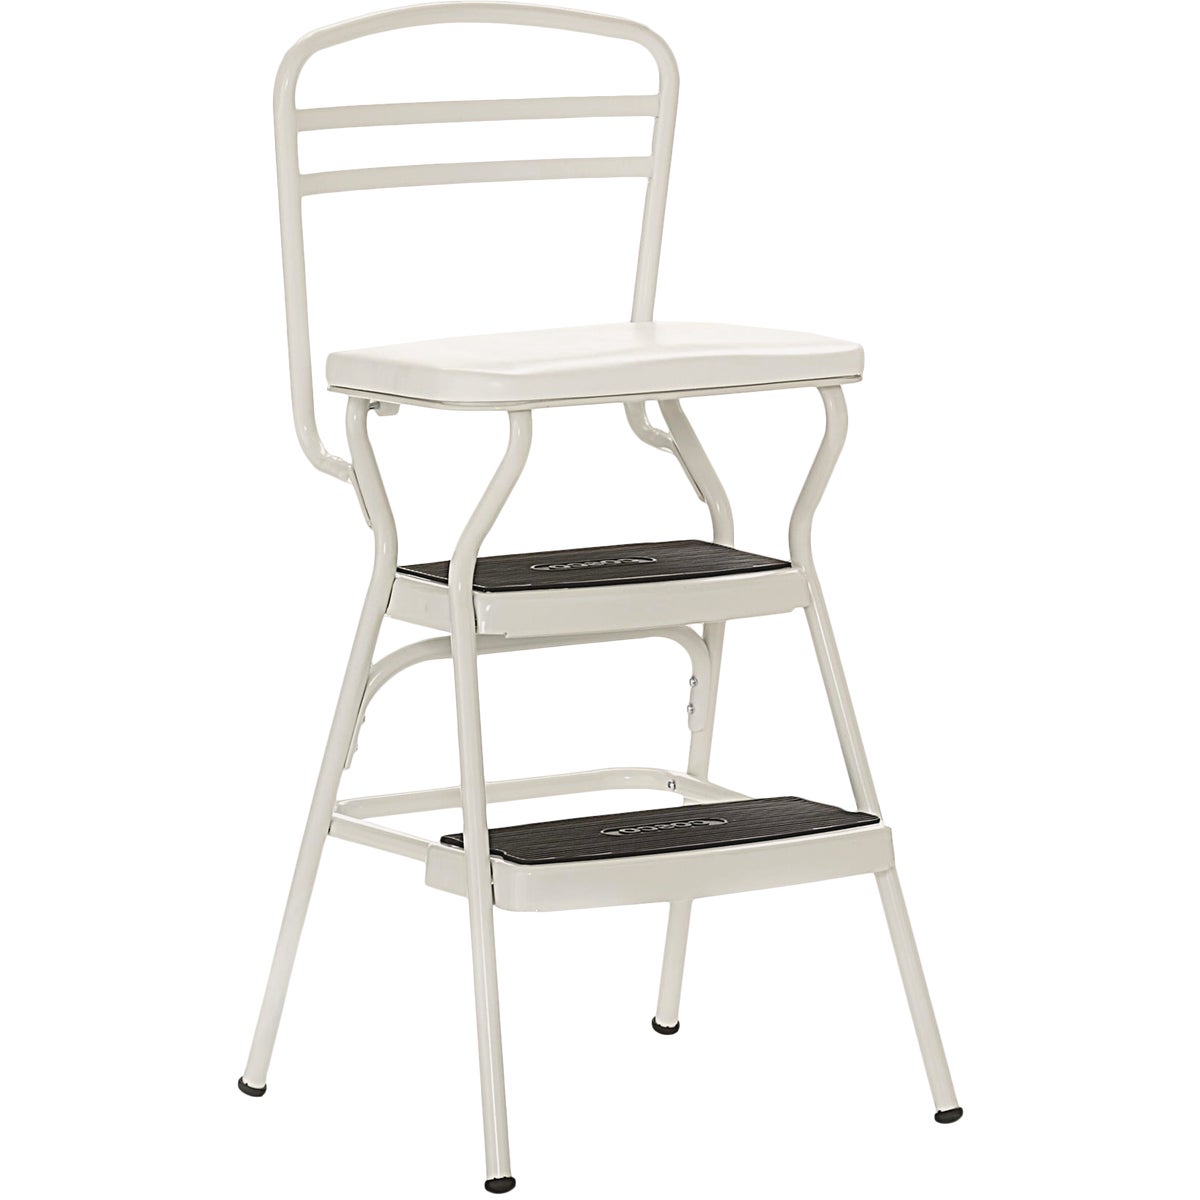 Cosco 2-Step Stool Chair